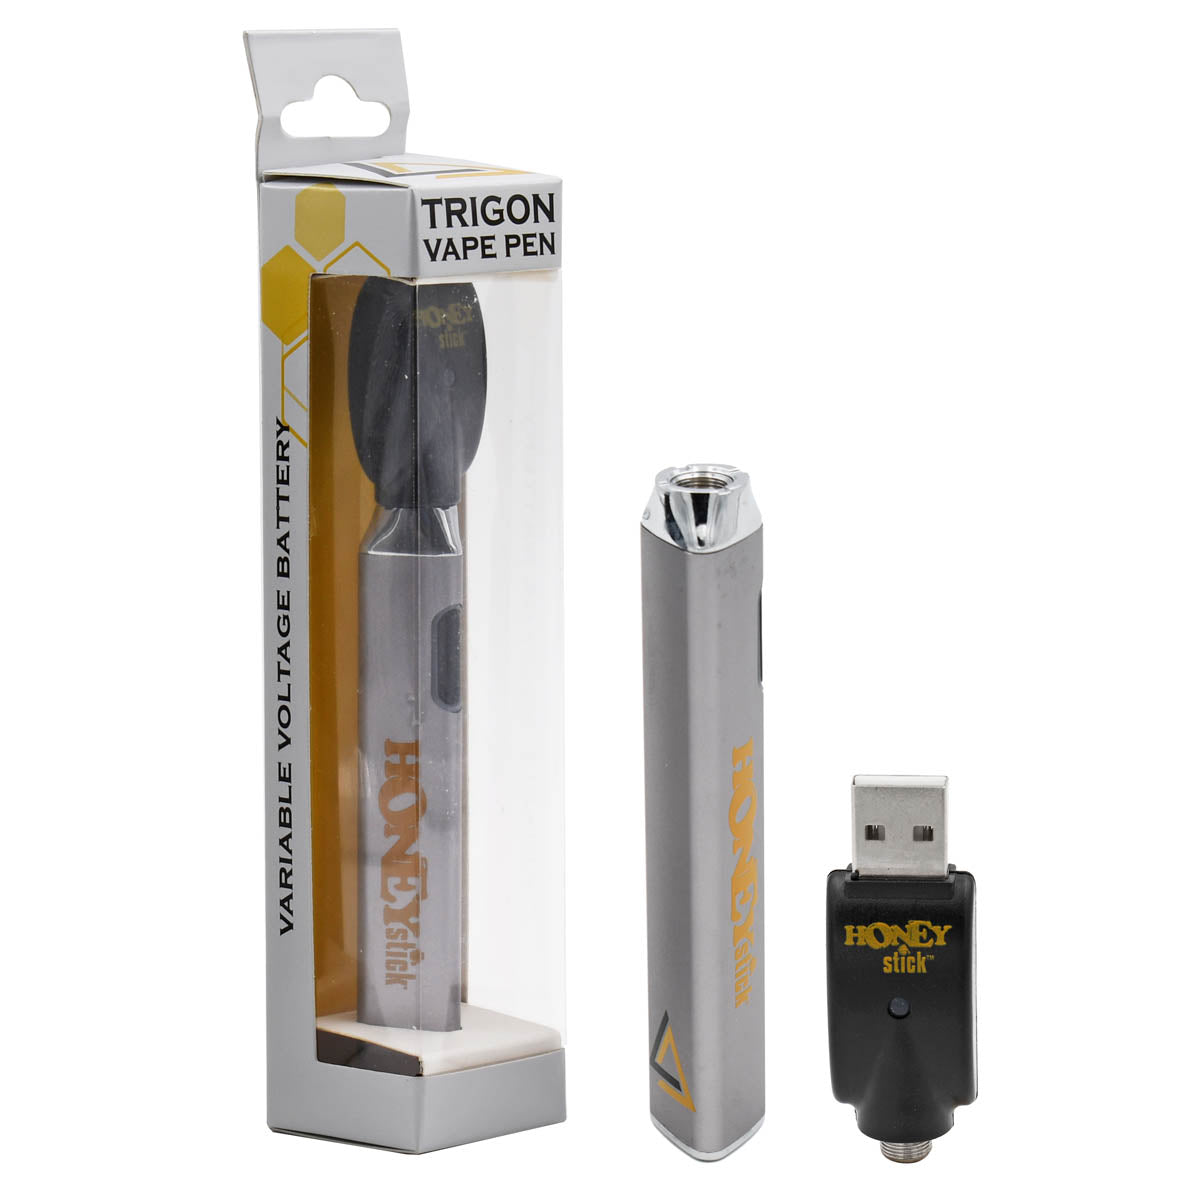 HoneyStick Trigon 510 Vape Pen Battery